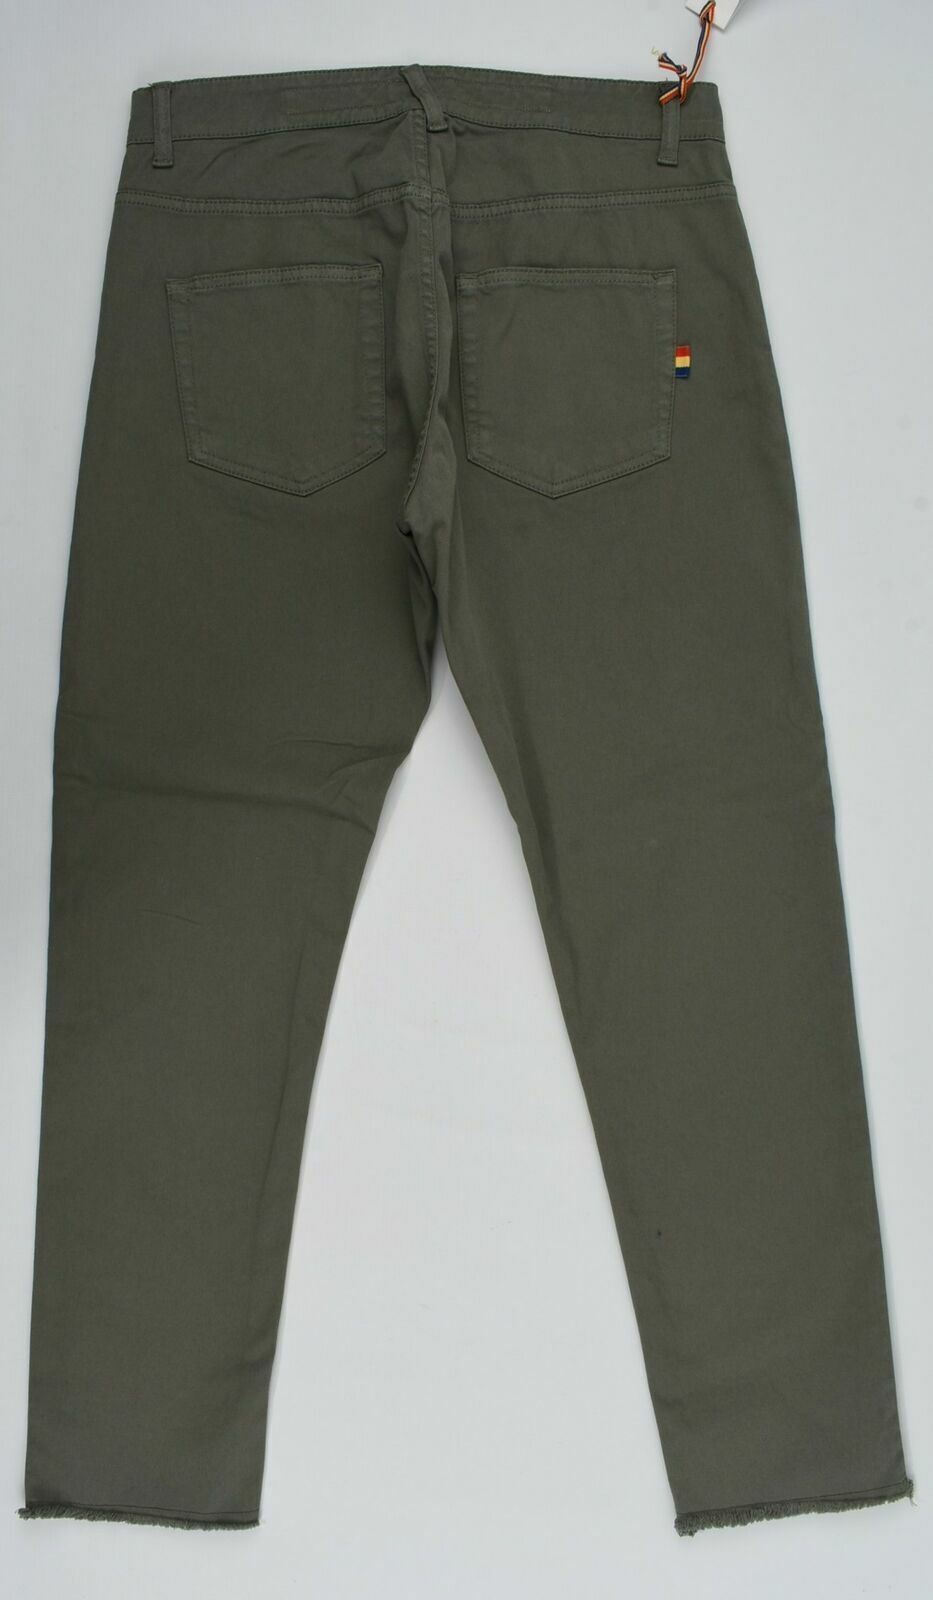 CASTELBAJAC Men's Slim Fit Khaki Green Jeans size W33